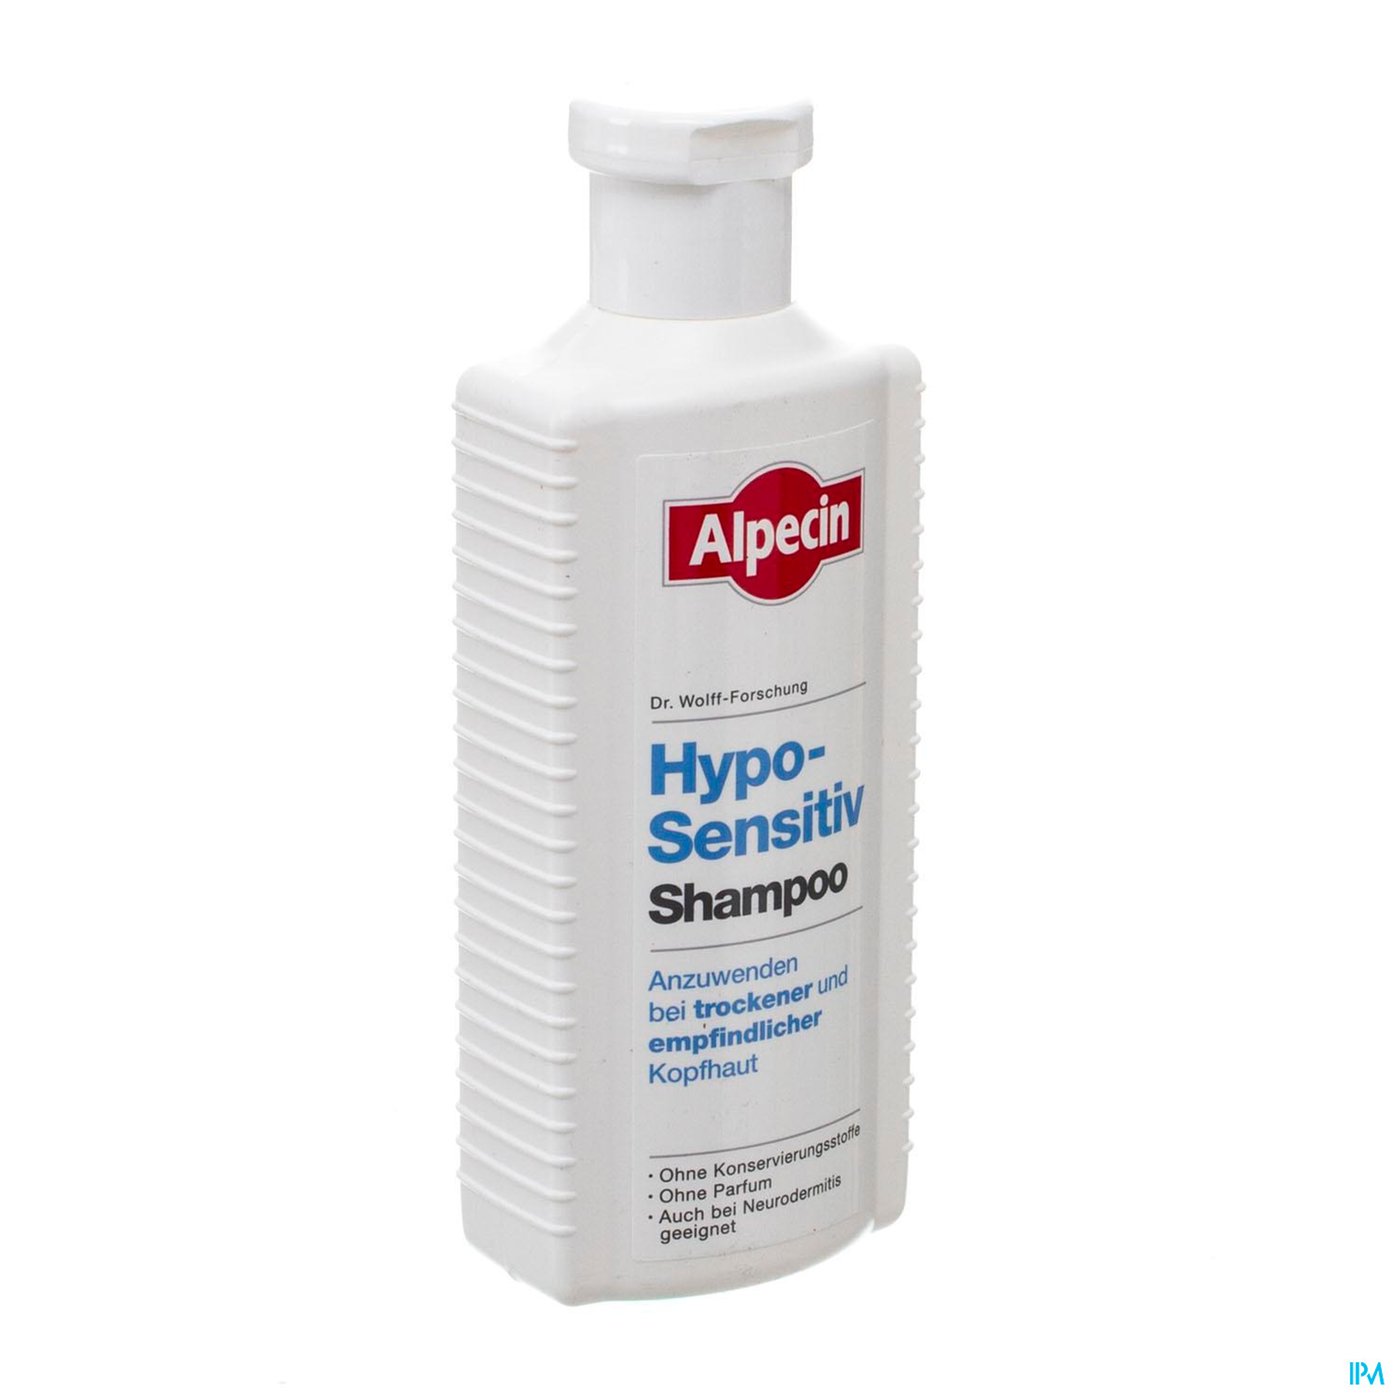 Alpecin Sh Hypo Sensitive 250ml packshot